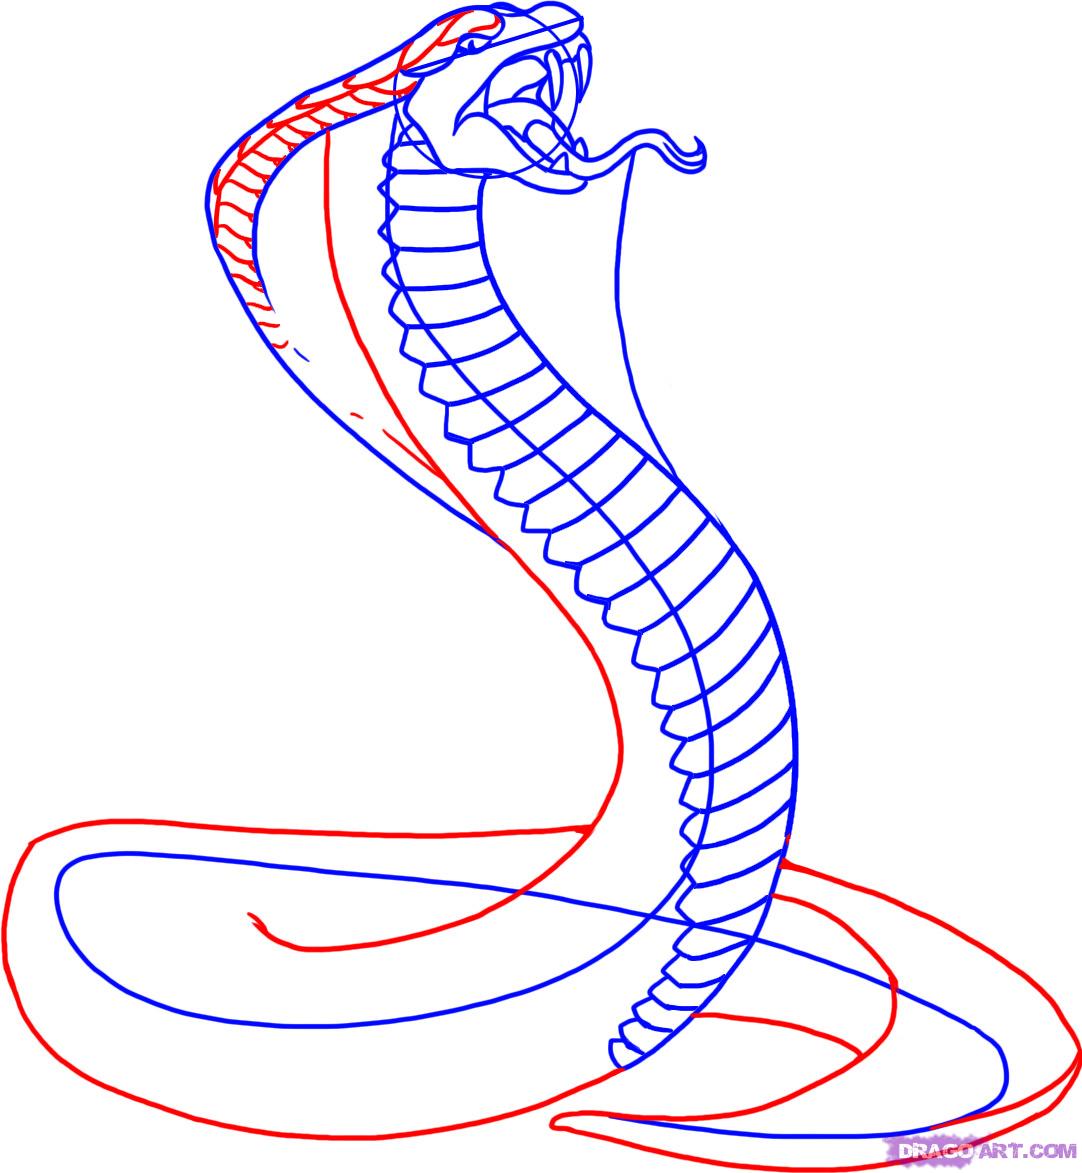 Free Cobra Drawing, Download Free Cobra Drawing png images, Free ...